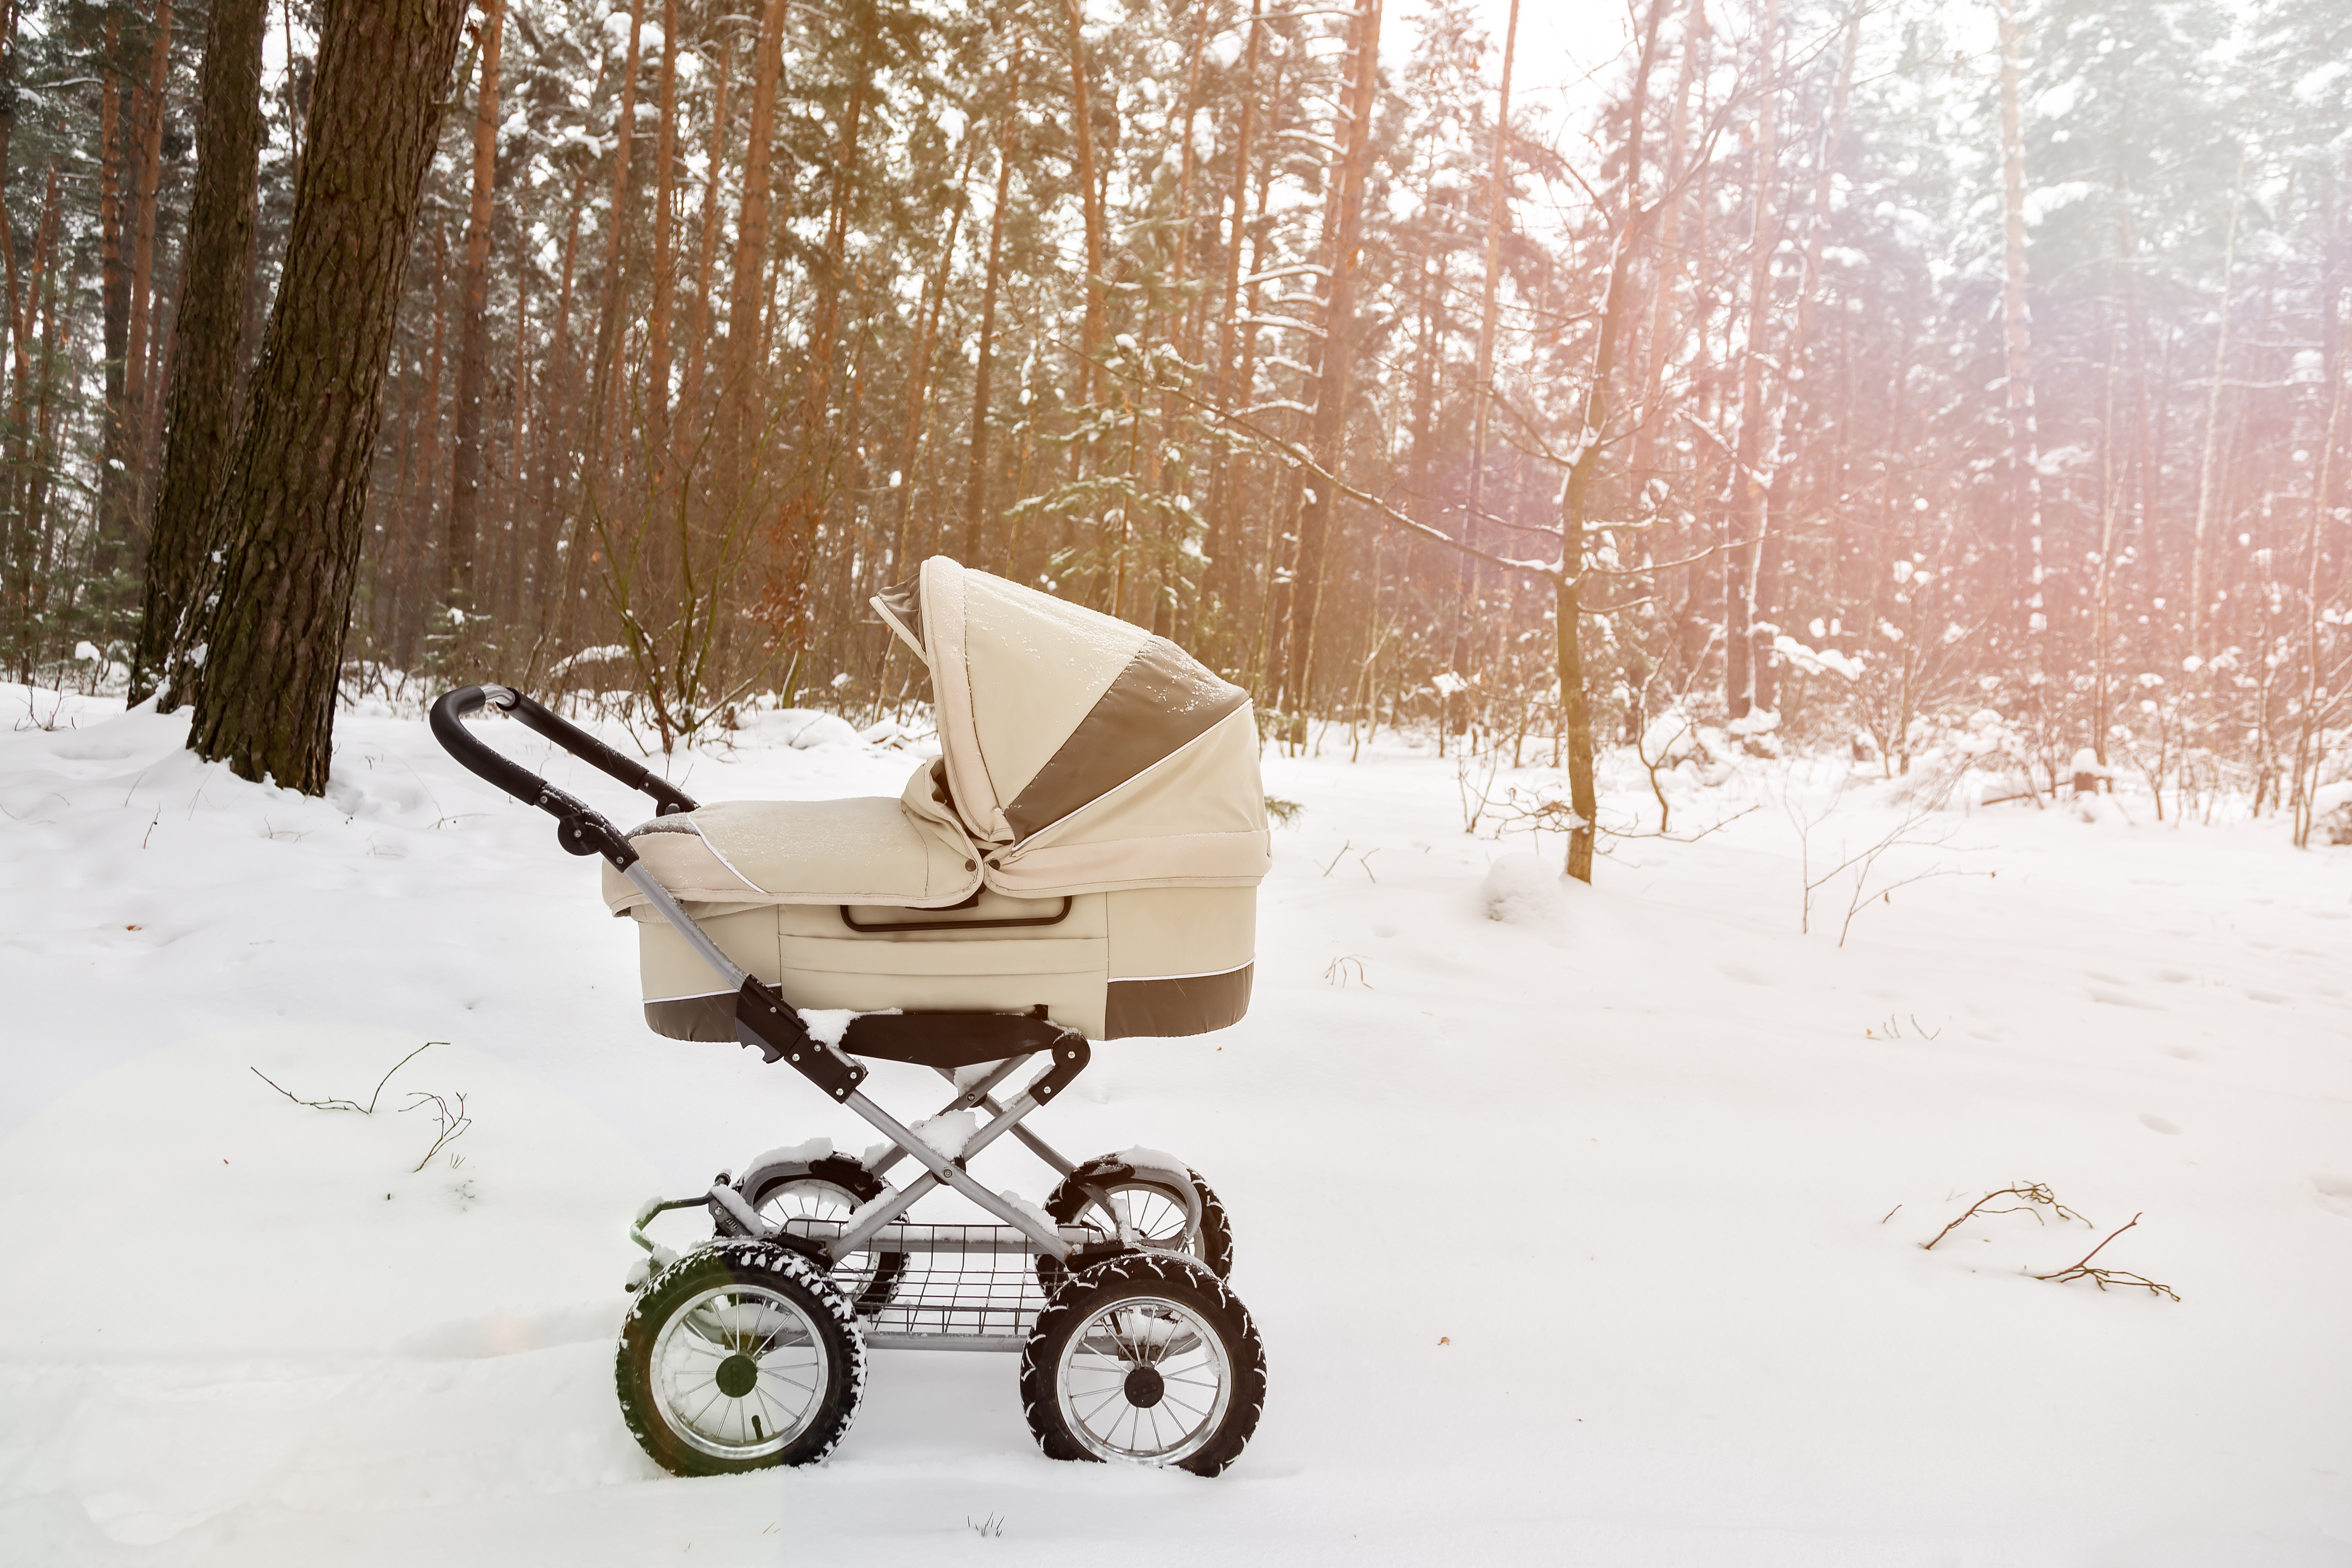 Baby stroller in winter forest | Source: Shutterstock